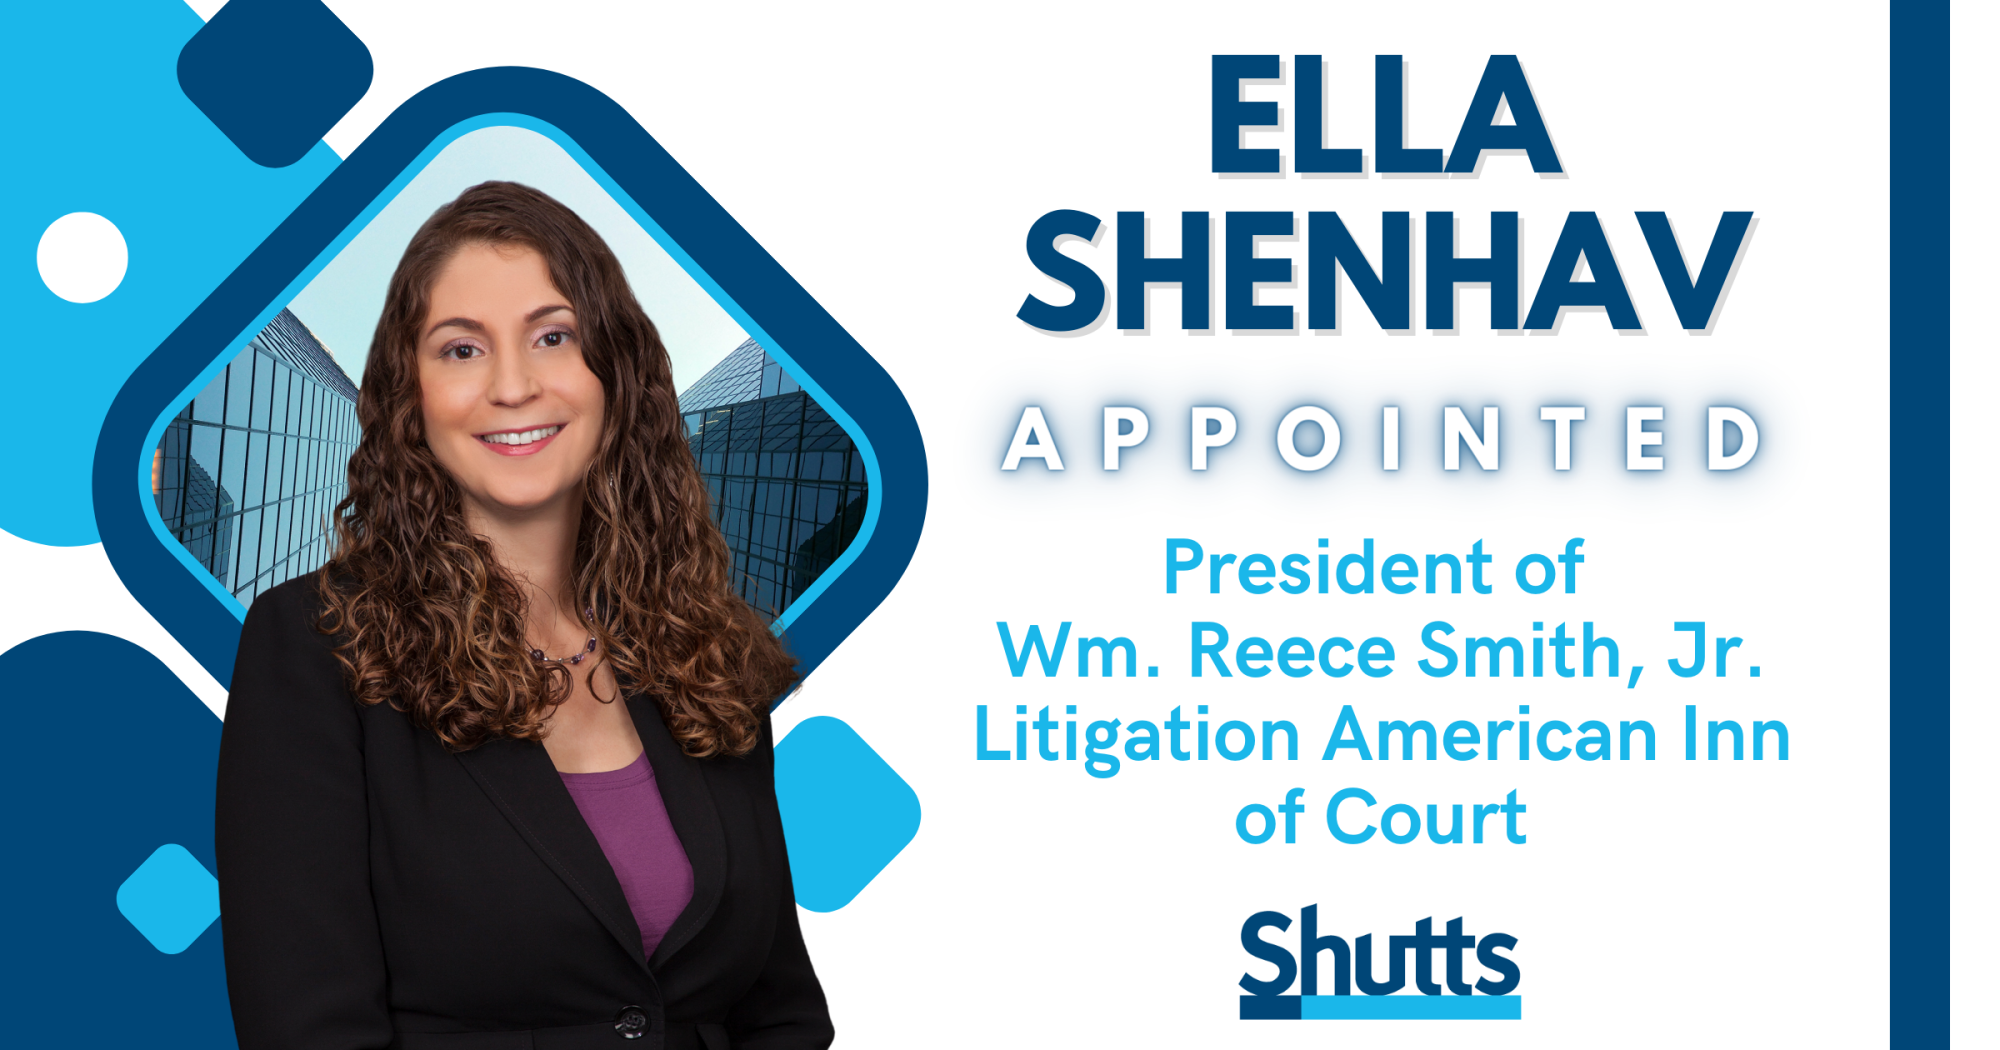 Ella Shenhav Appointed President of Wm. Reece Smith, Jr. Litigation American Inn of Court